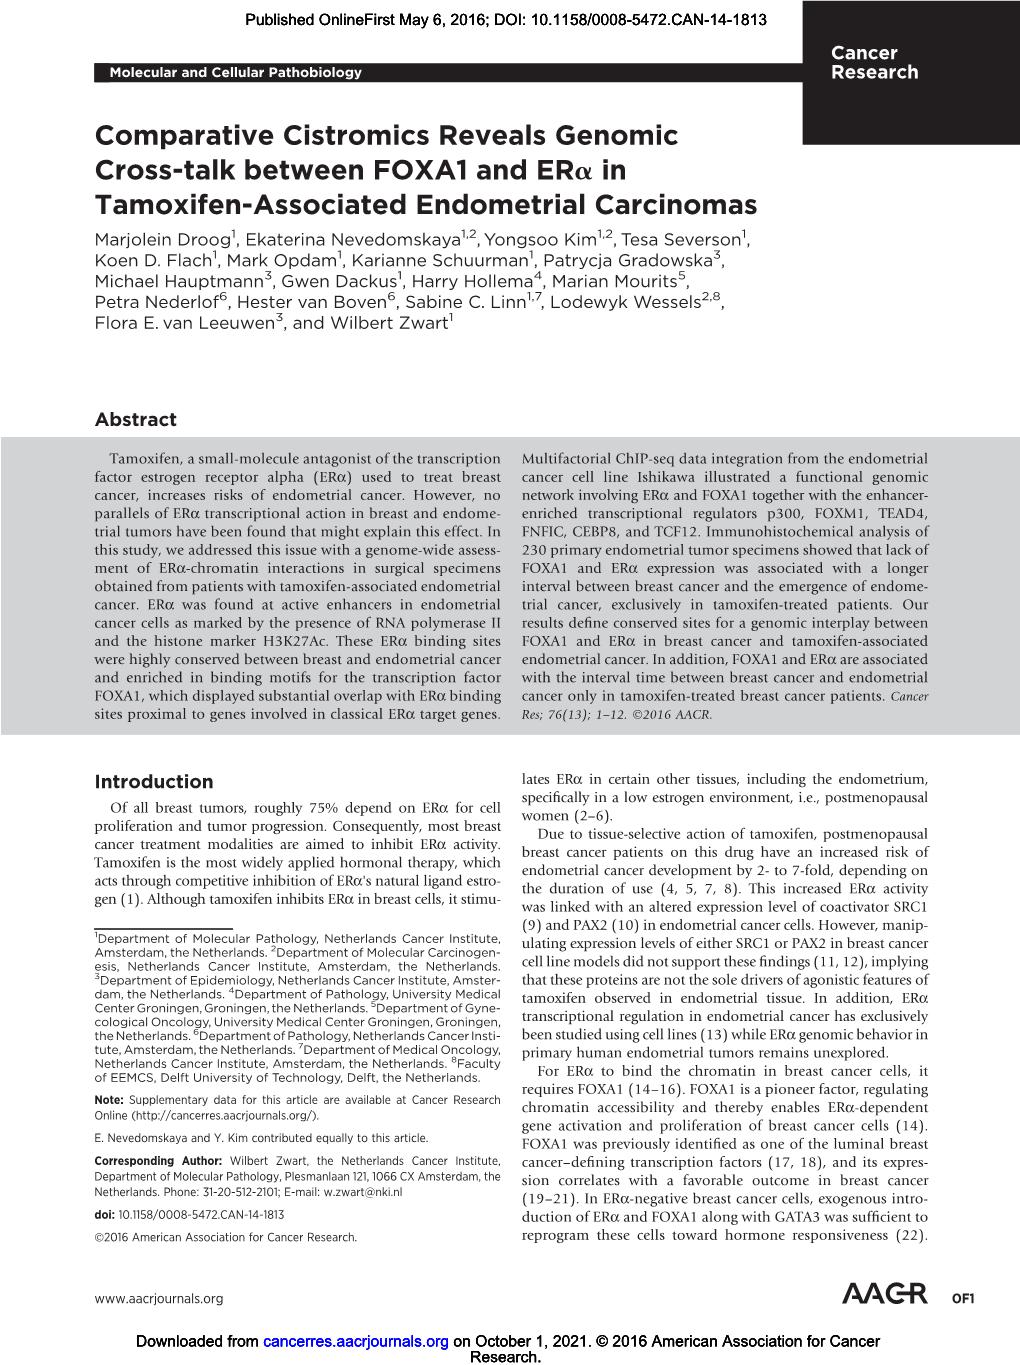 Comparative Cistromics Reveals Genomic Cross-Talk Between FOXA1 and Era in Tamoxifen-Associated Endometrial Carcinomas